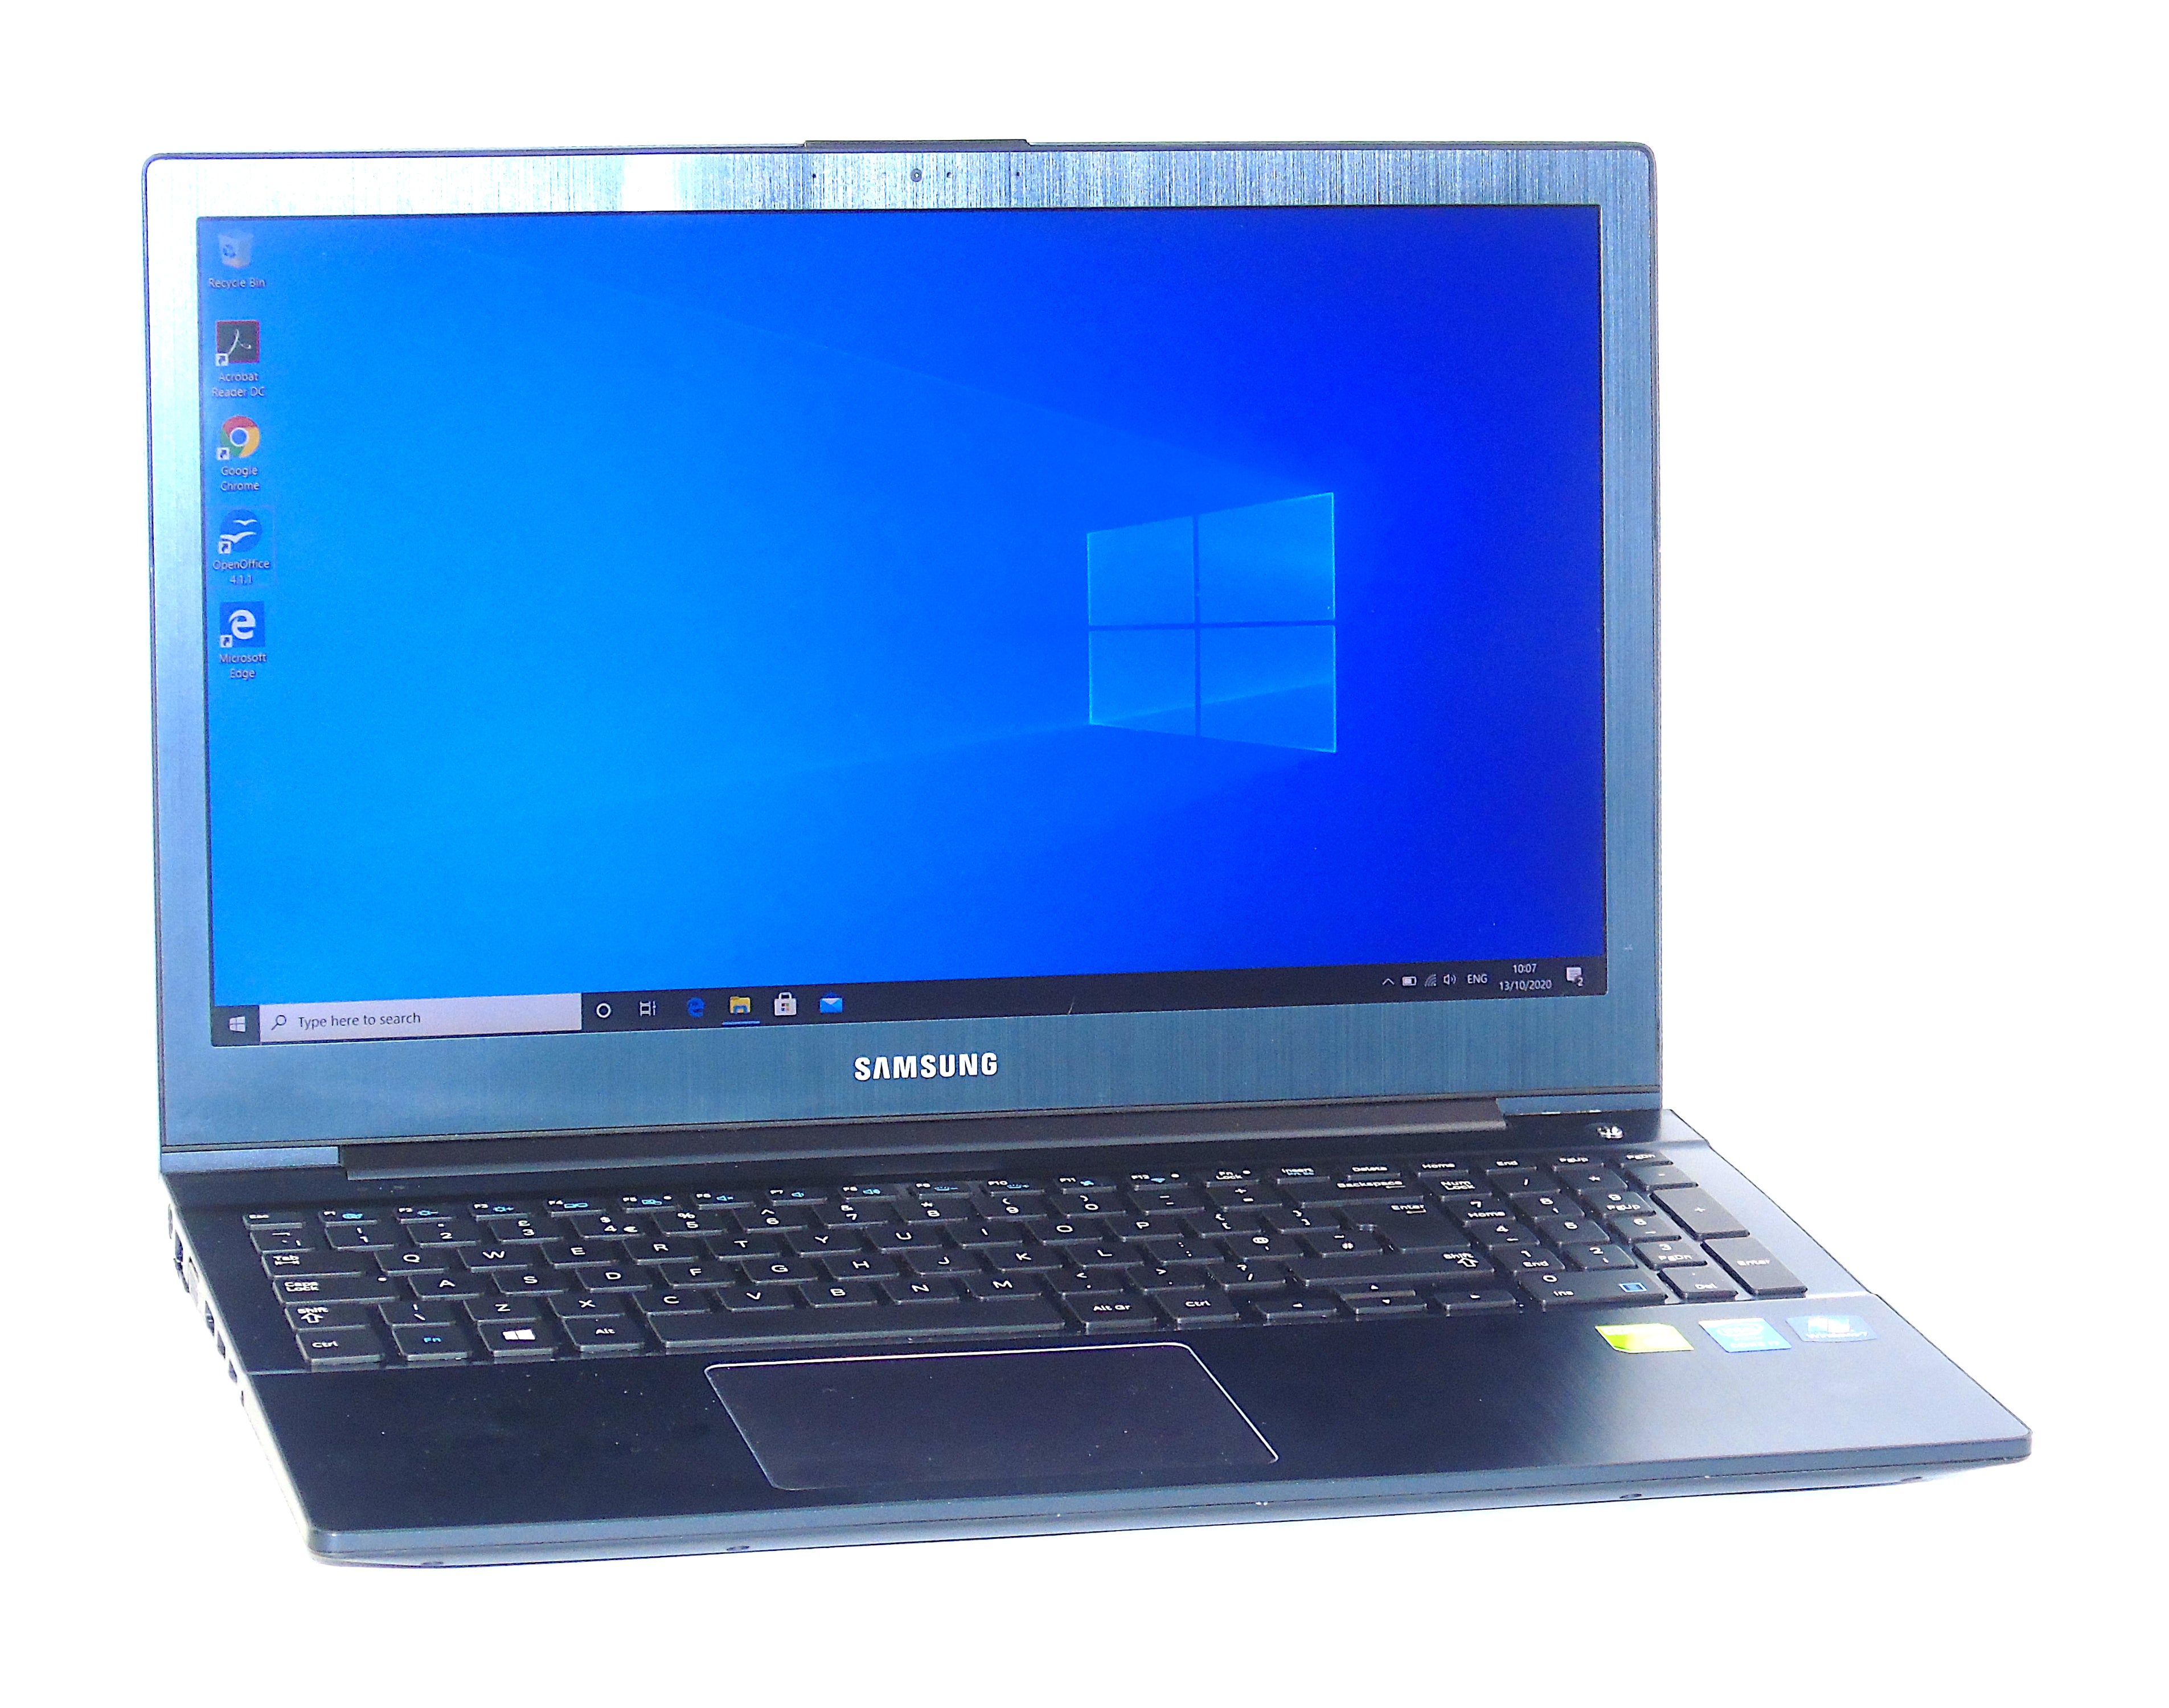 Samsung 870Z Laptop, 15.6" Intel Core i7, 8GB RAM 250GB SSD